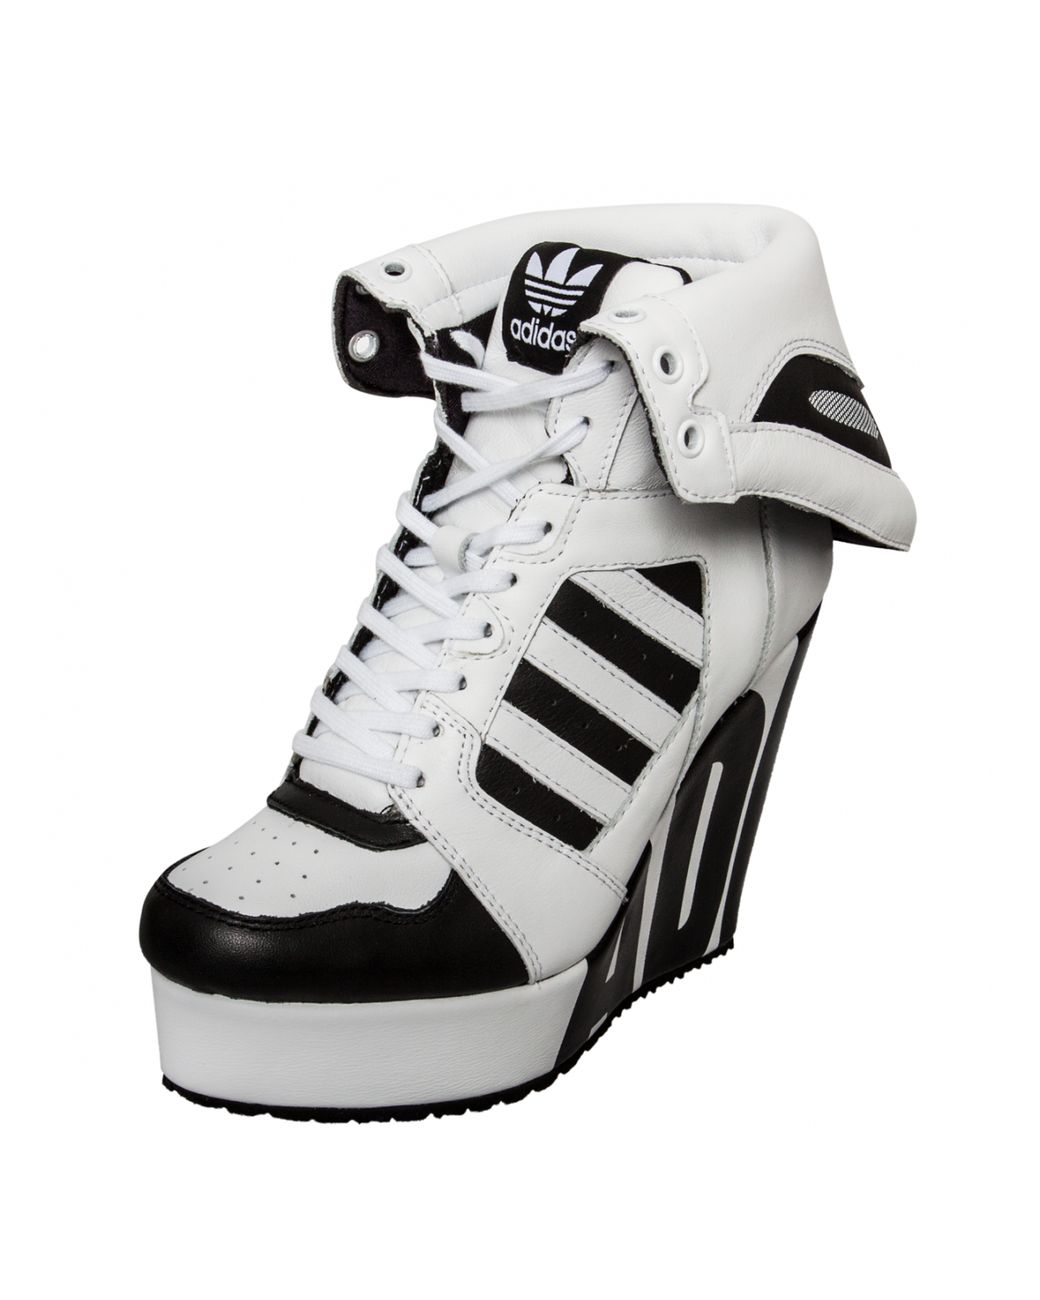 Jeremy Scott for adidas Platform Wedge White/Black Lyst